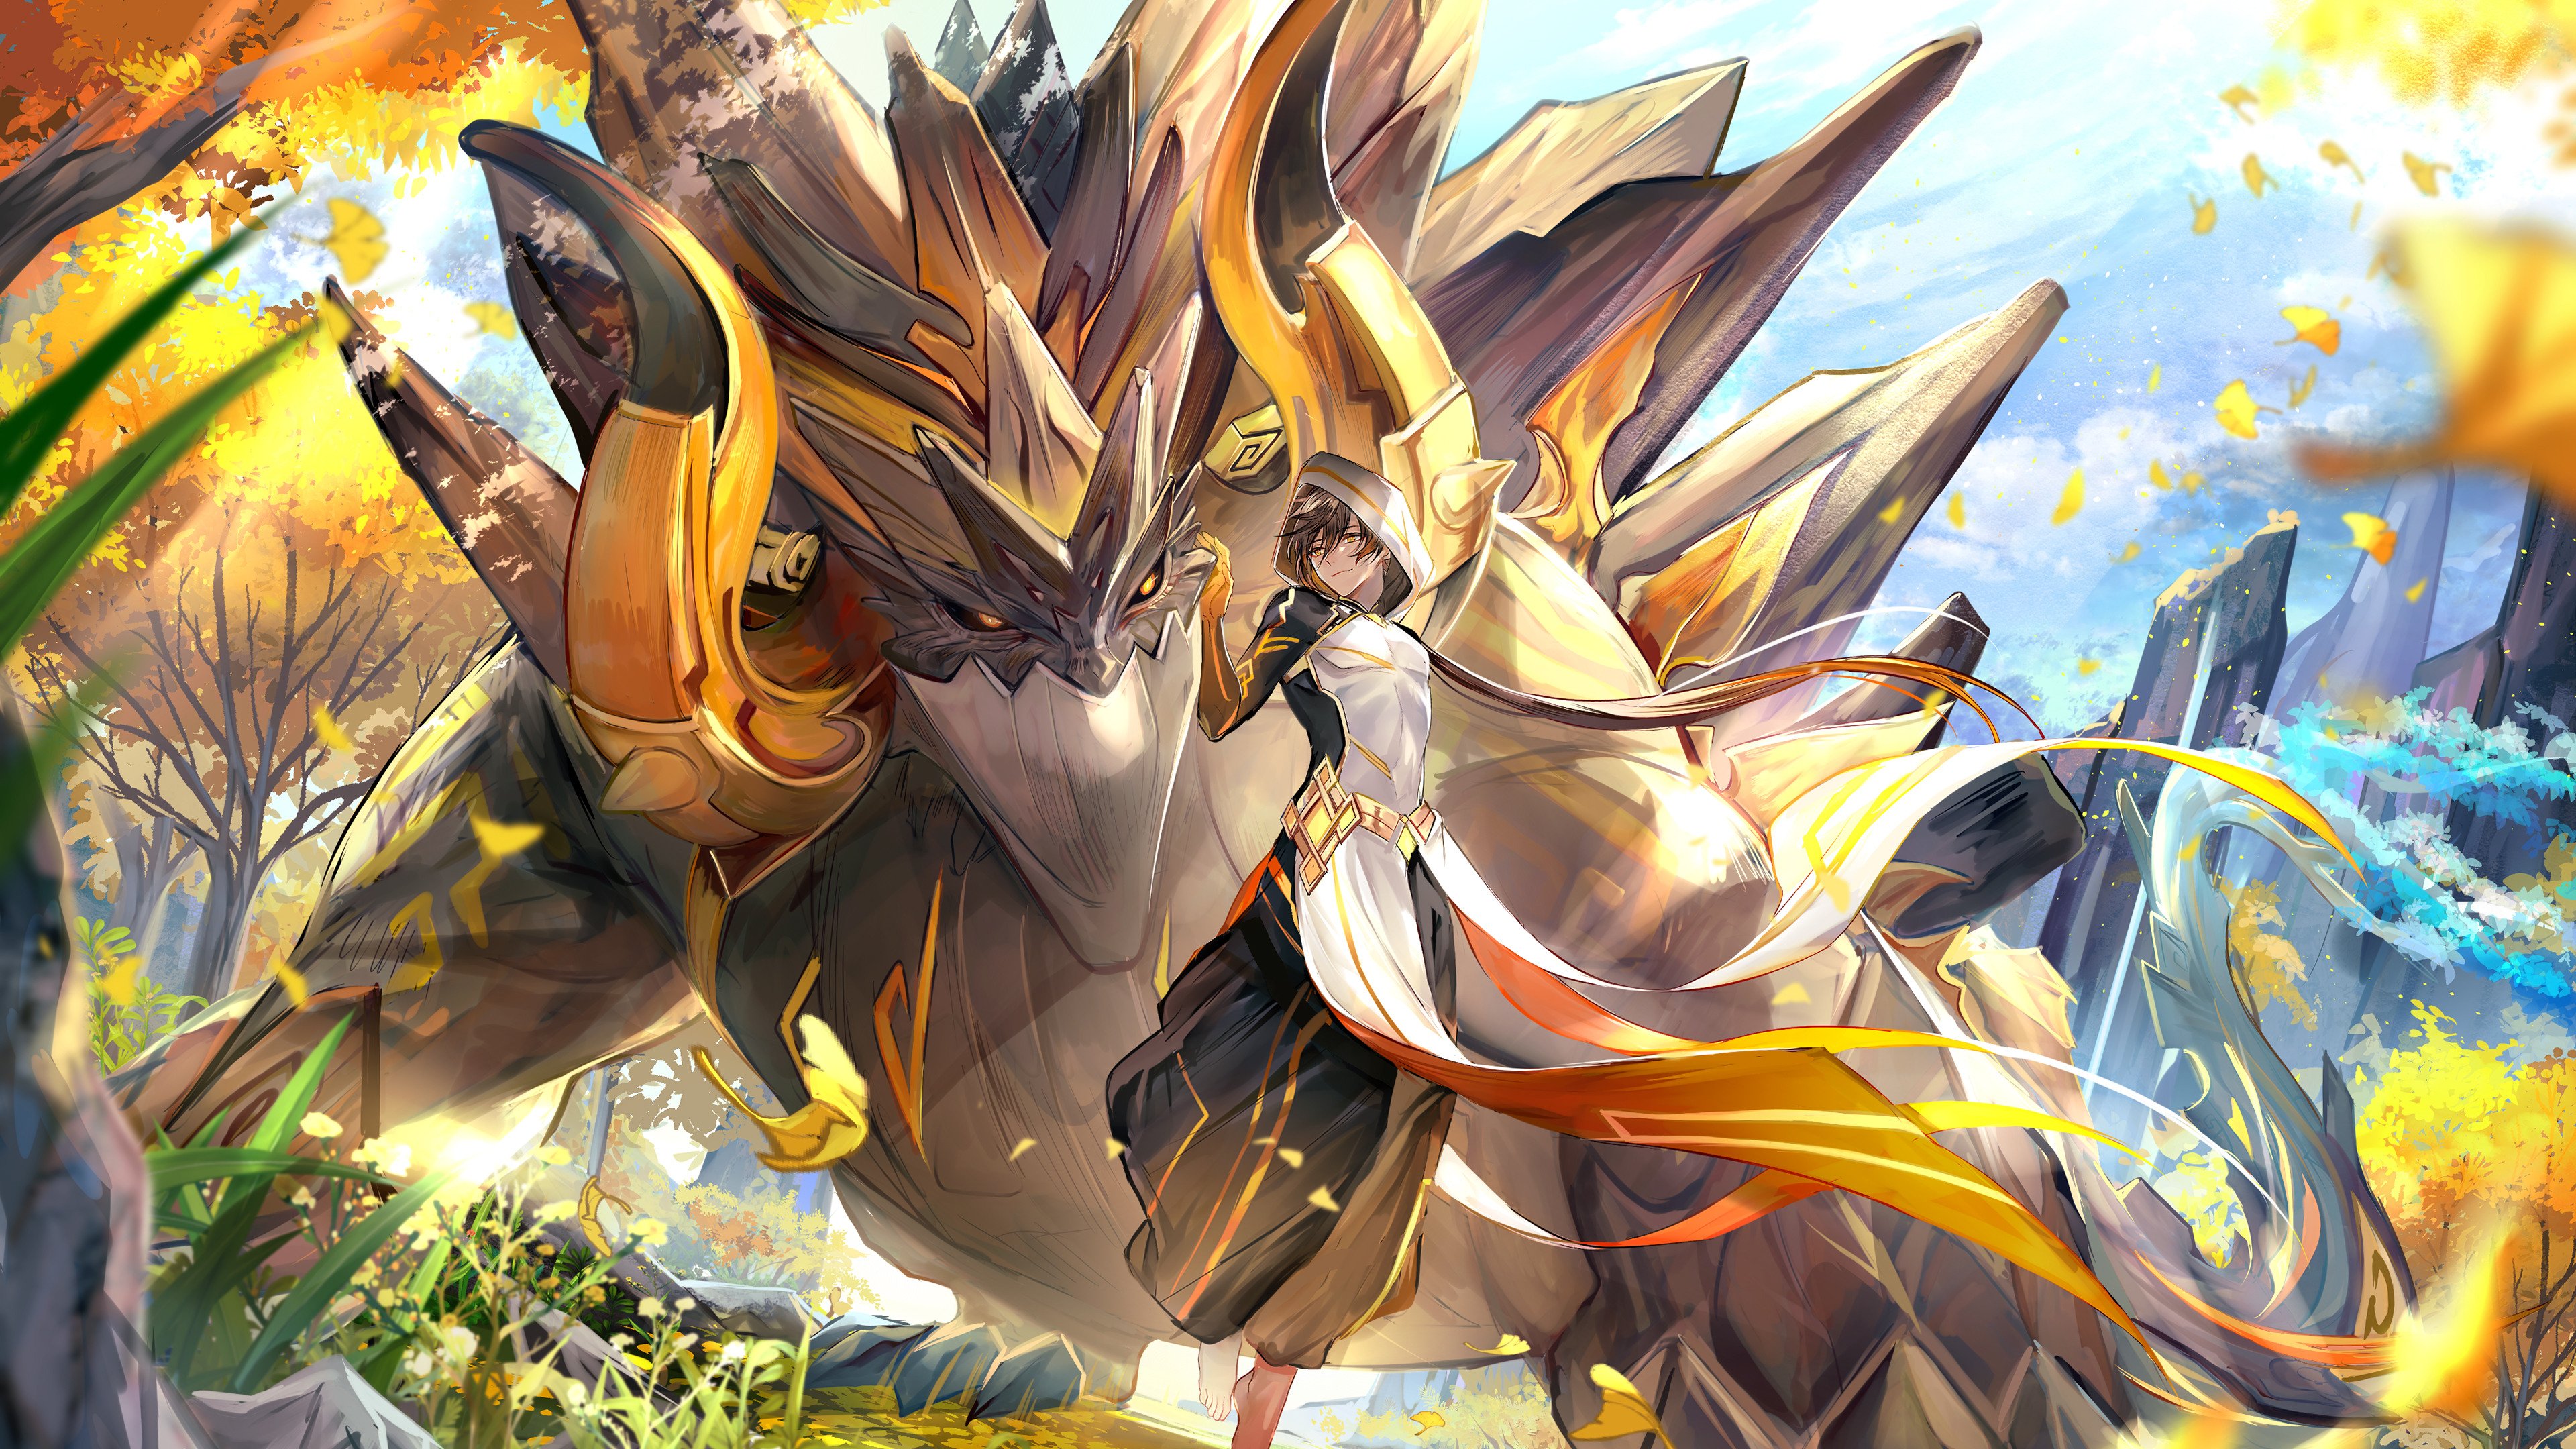 Wanderer Fanart  Genshin Impact Anime Video Game 4K wallpaper download